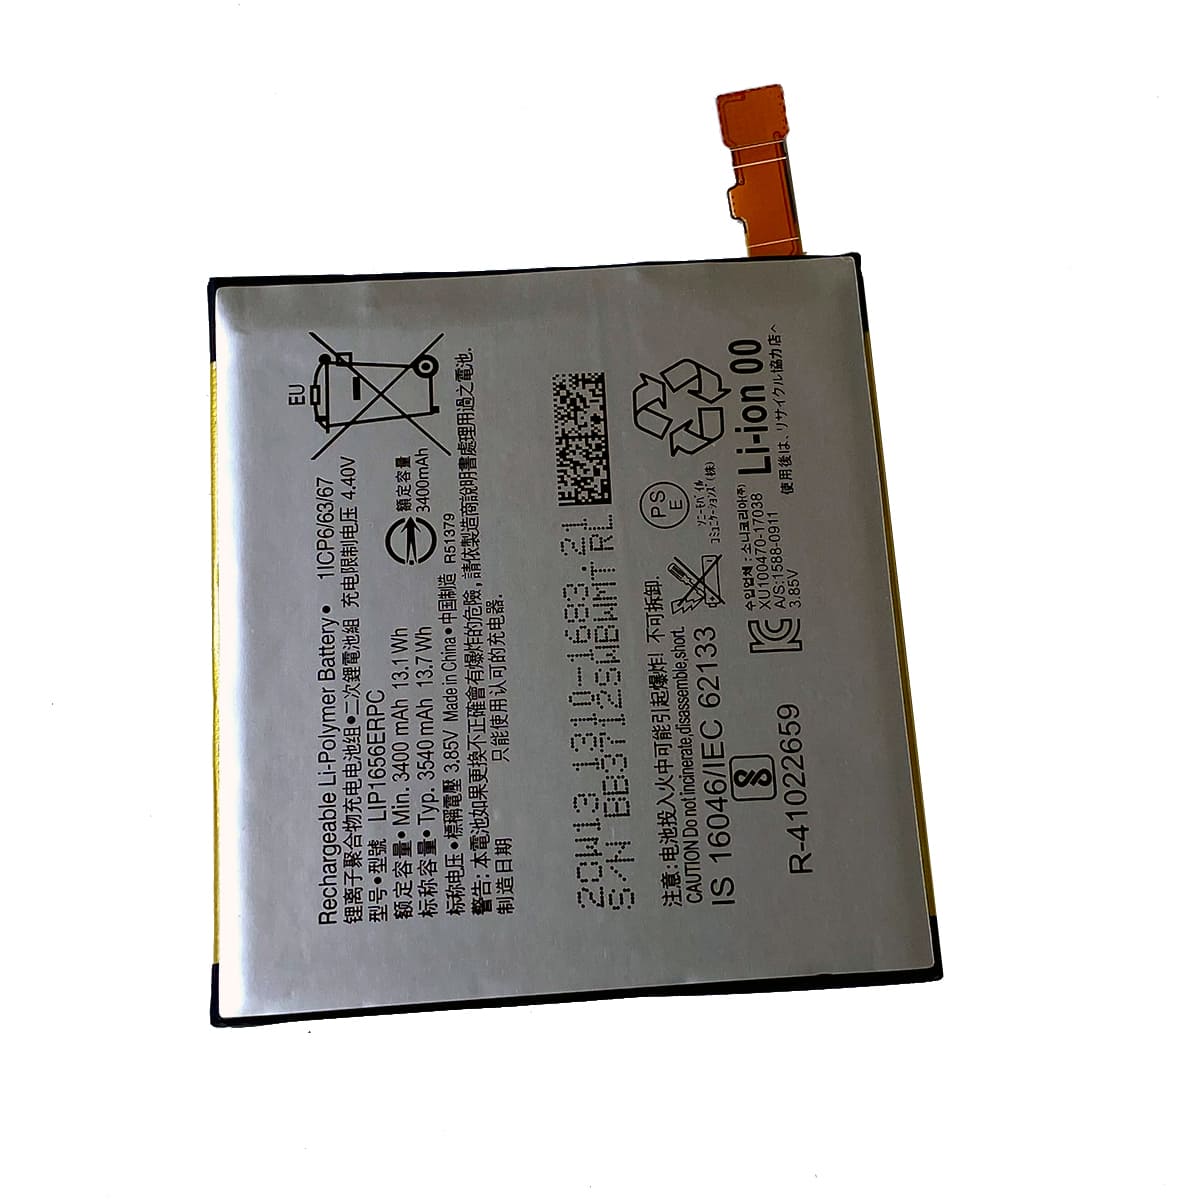 XperiaXZ2Premium 内蔵互換バッテリー 交換用電池パック 修理用部品 エクスぺリアXZ2プレミアム SONY SO-04K LIP1656ERPC メール便なら送料無料画像